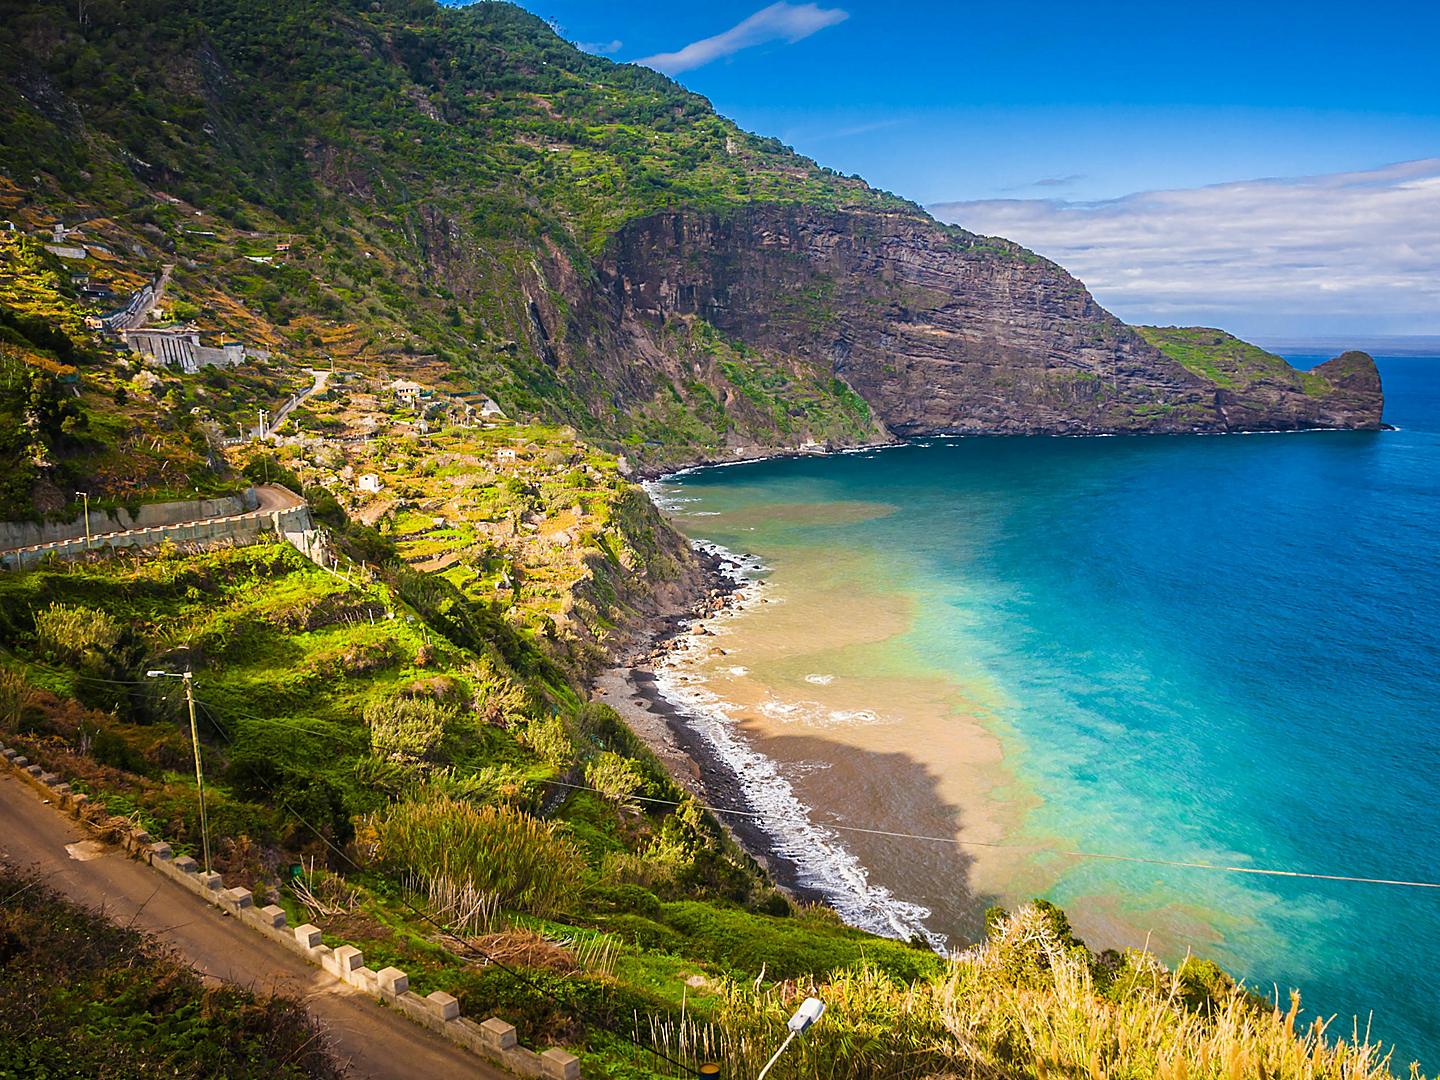 Madeira (Funchal), Portugal, Coastal Village